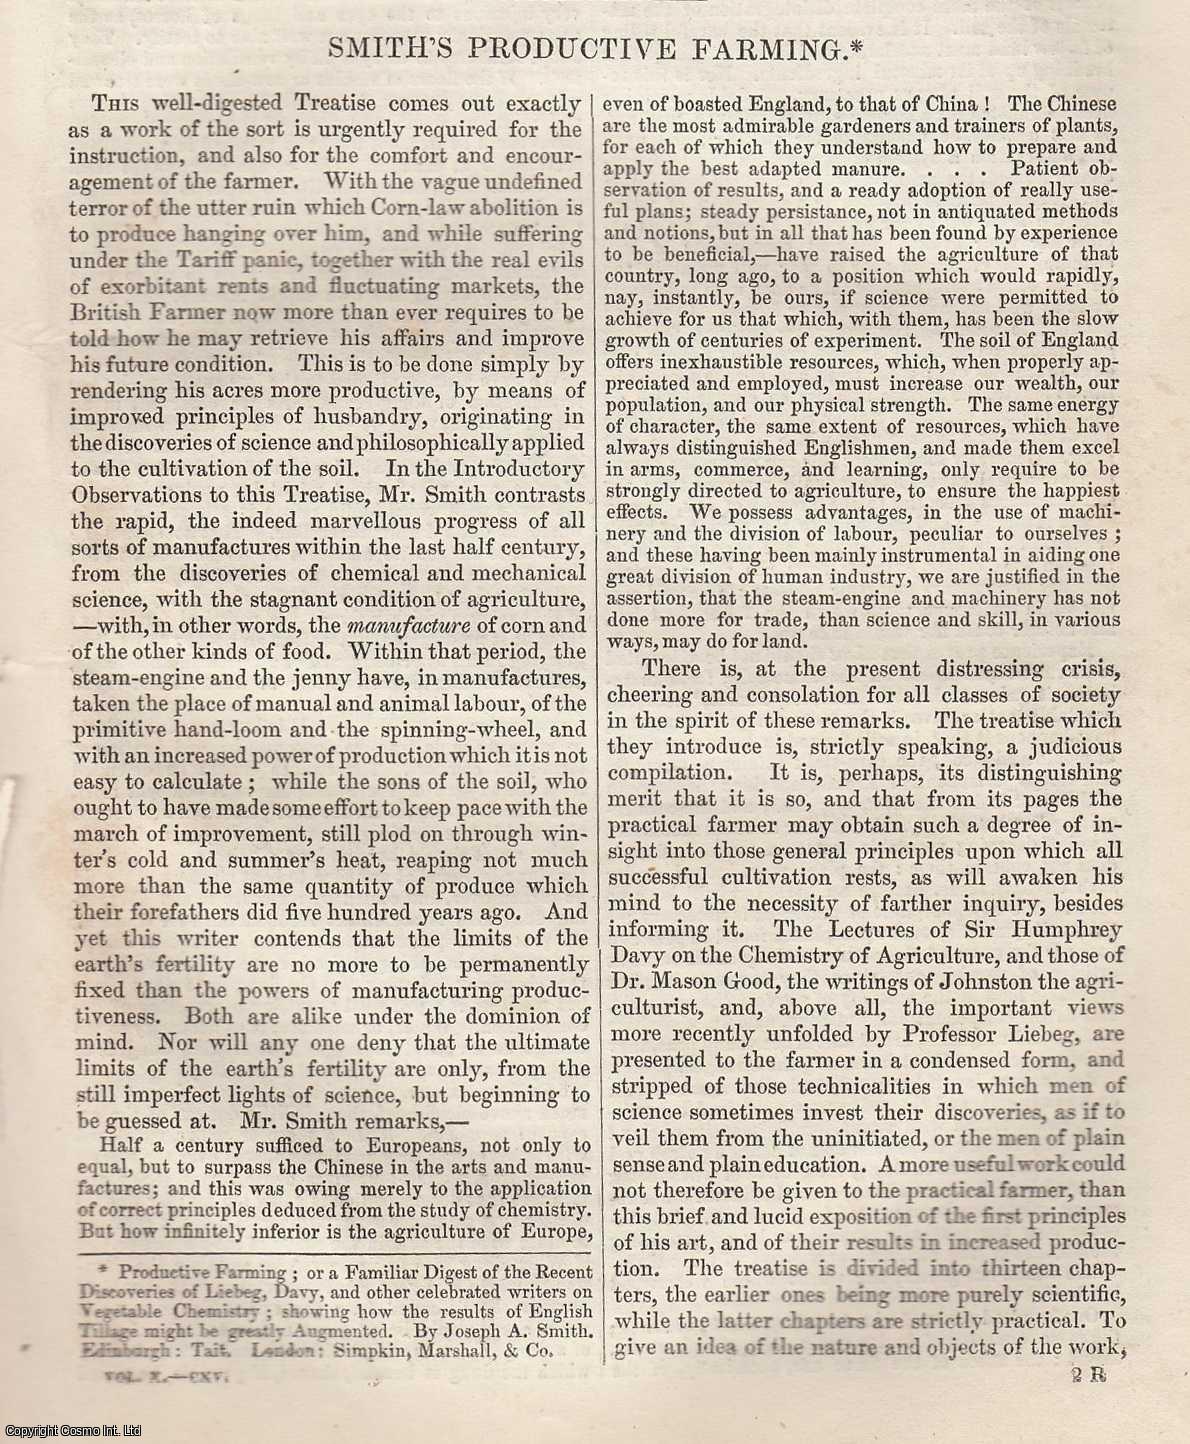 Johnstone, Christian - Smith's Productive Farming. An original article from Tait's Edinburgh Magazine, 1843.